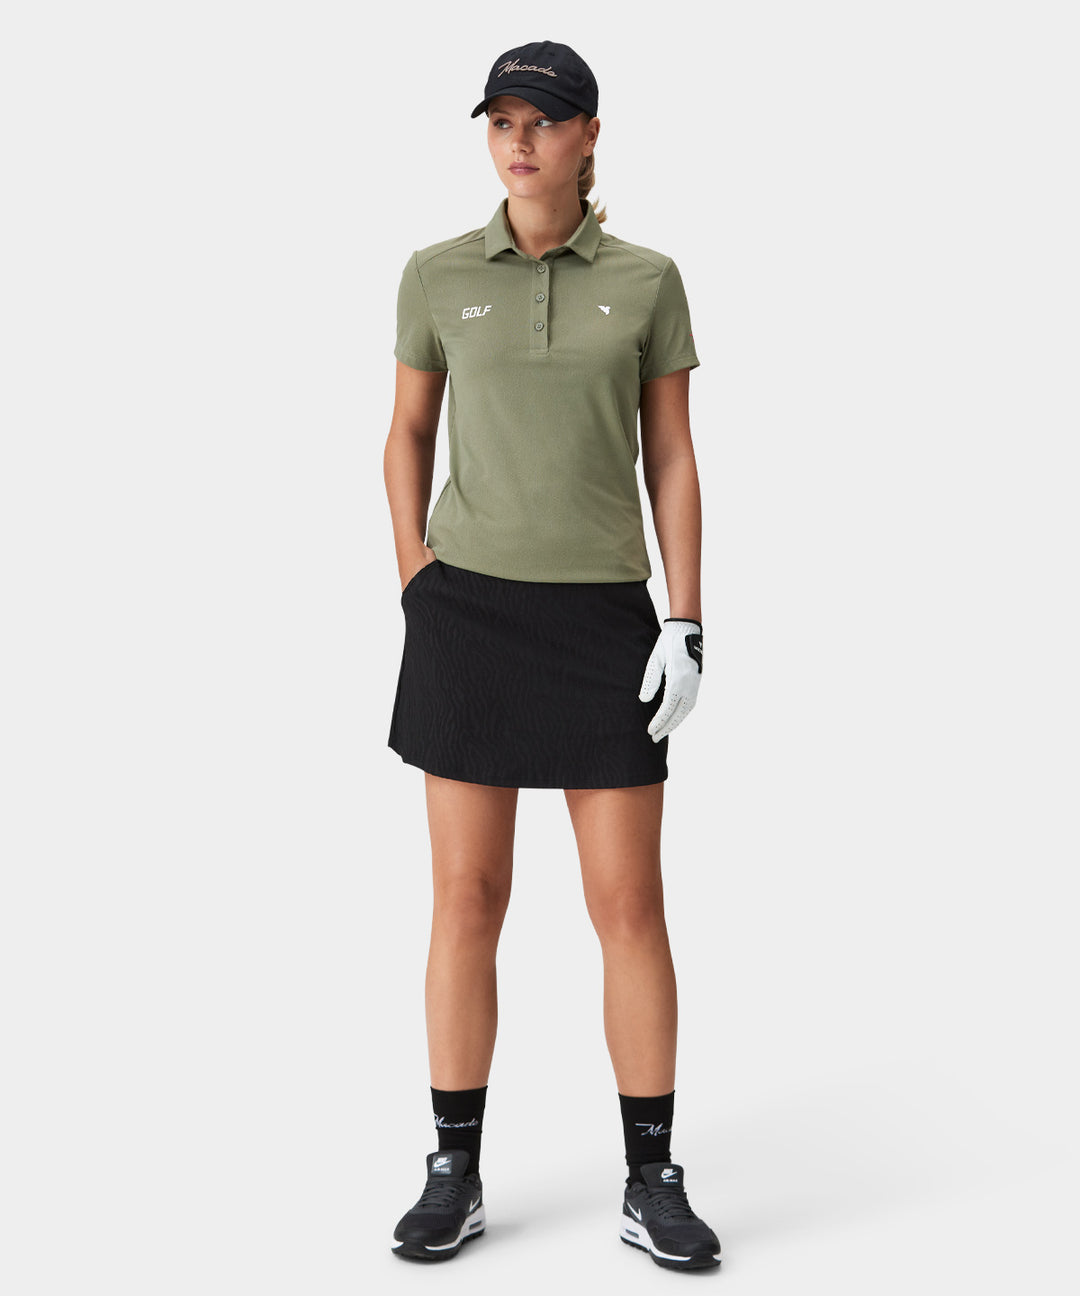 Rori Black Performance Skirt Macade Golf